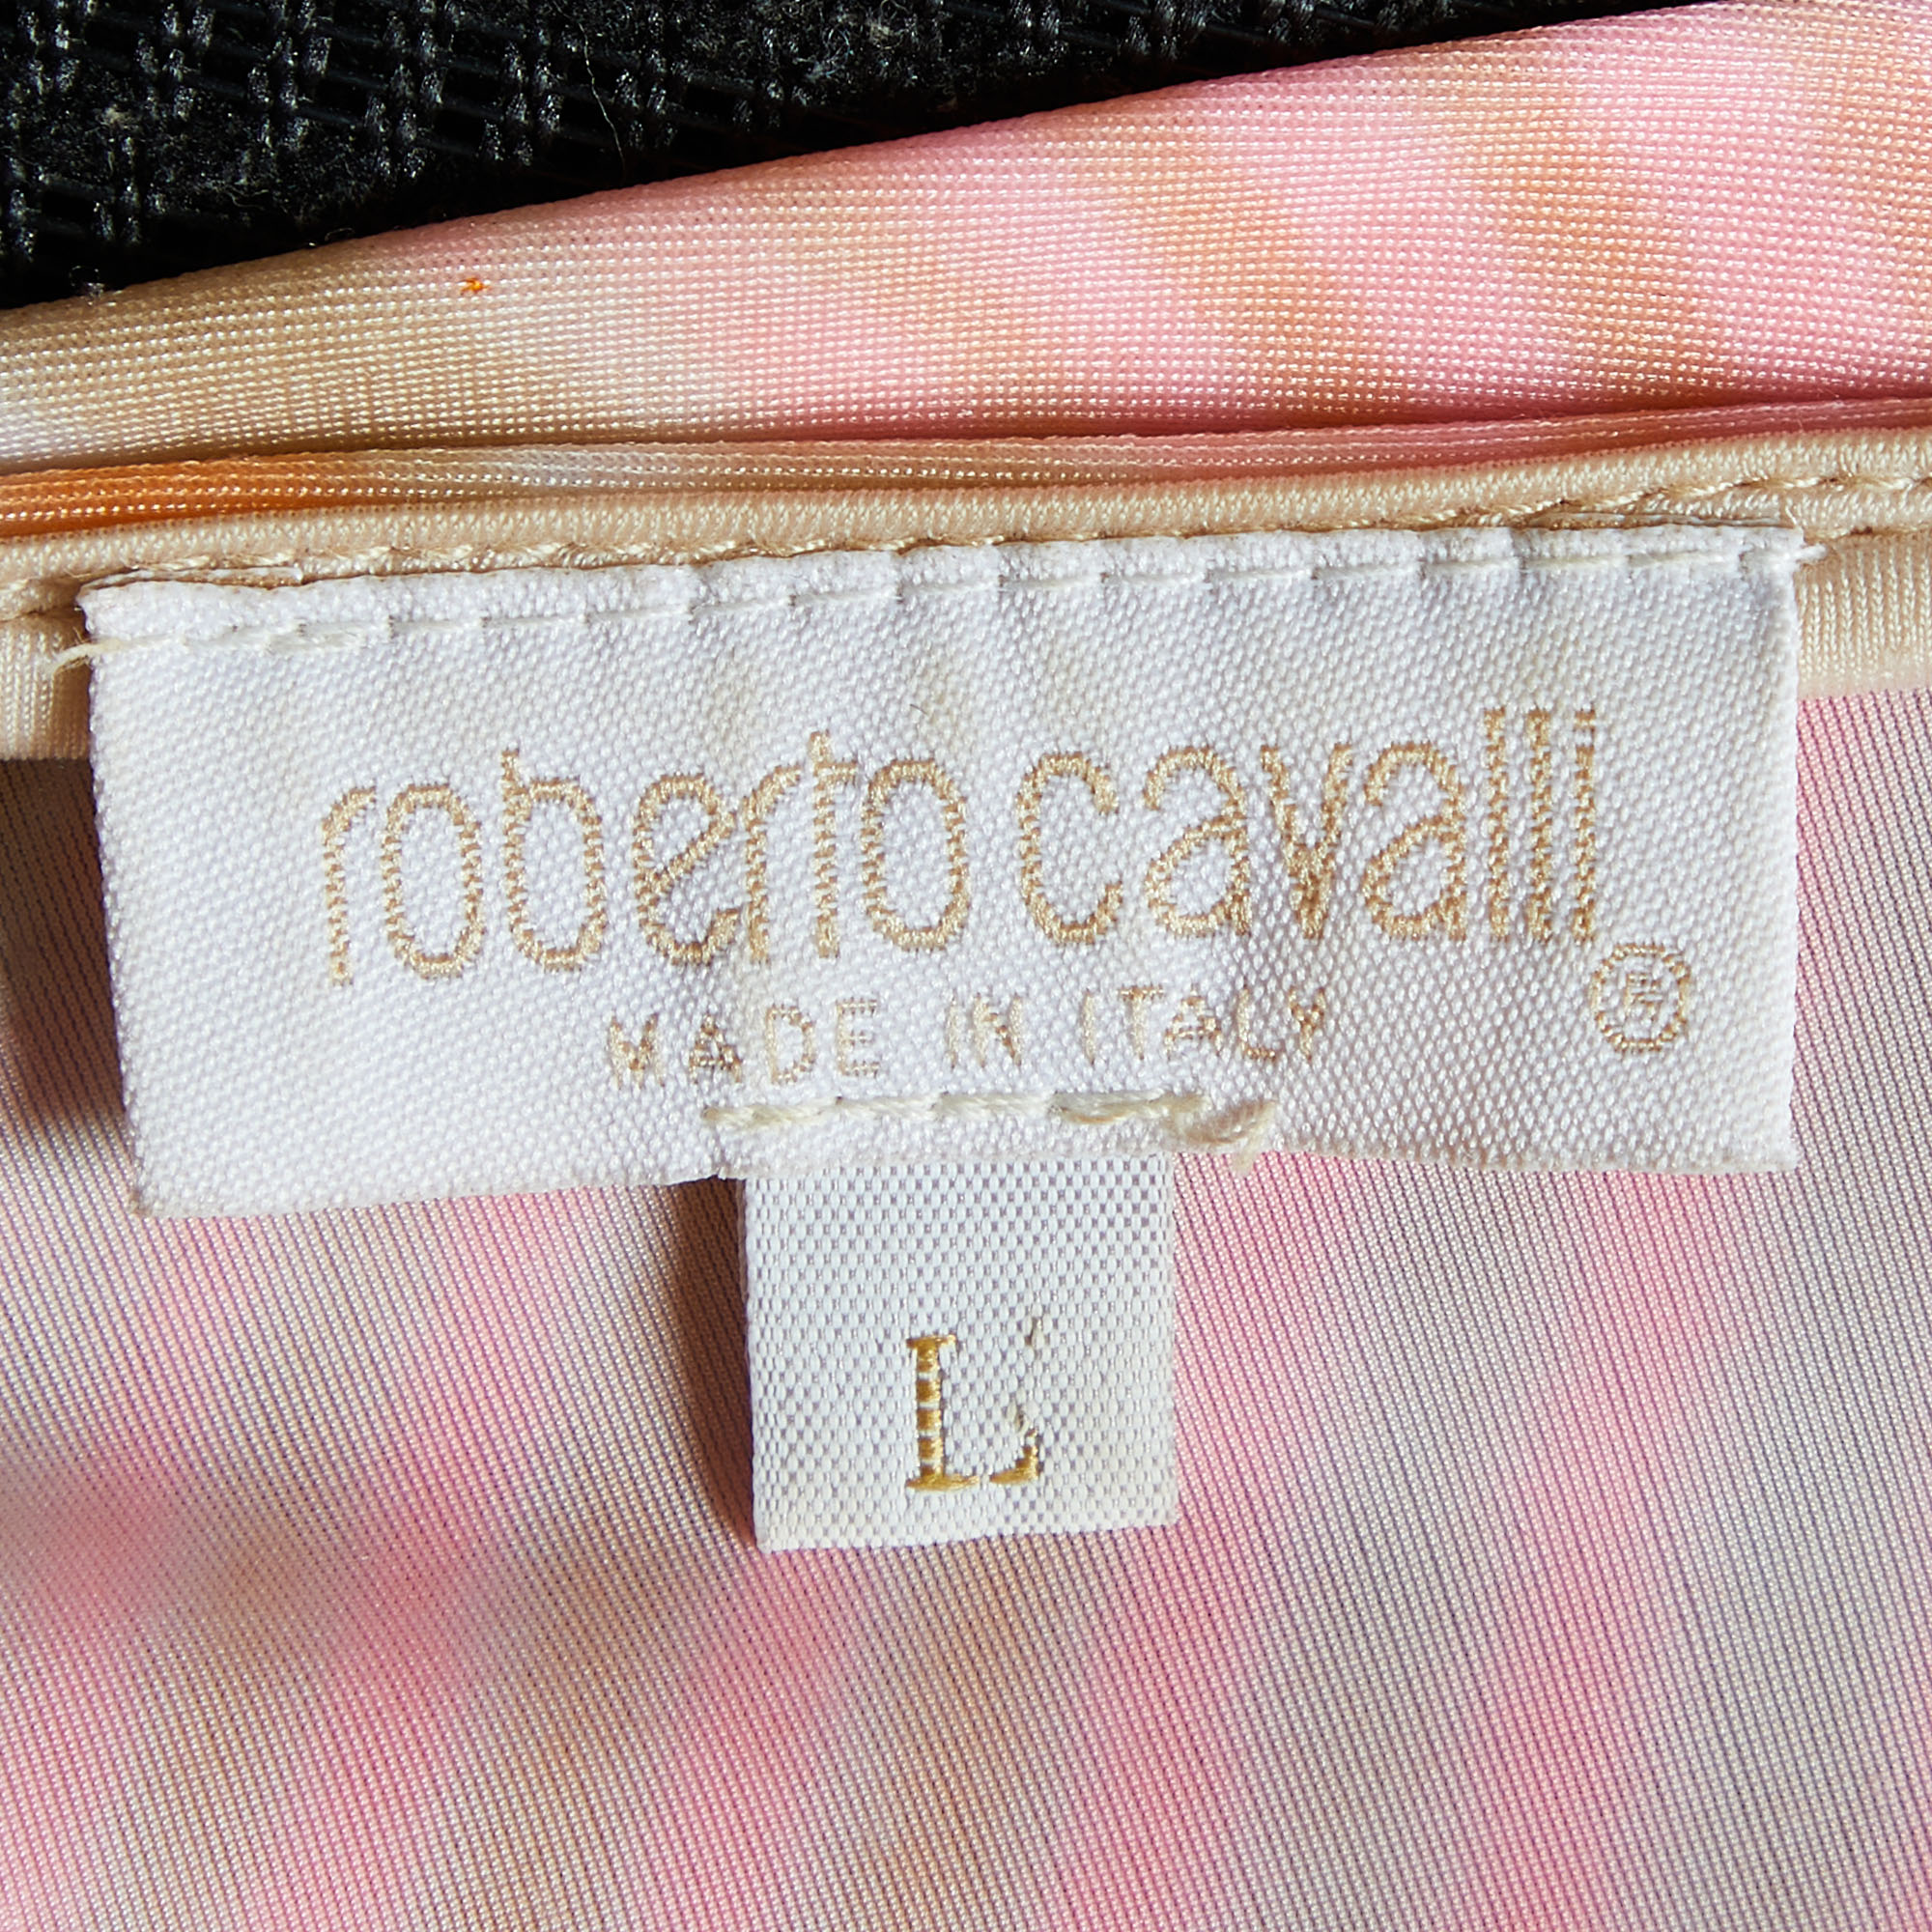 Roberto Cavalli Multicolor Printed Jersey Wide Neck Top L